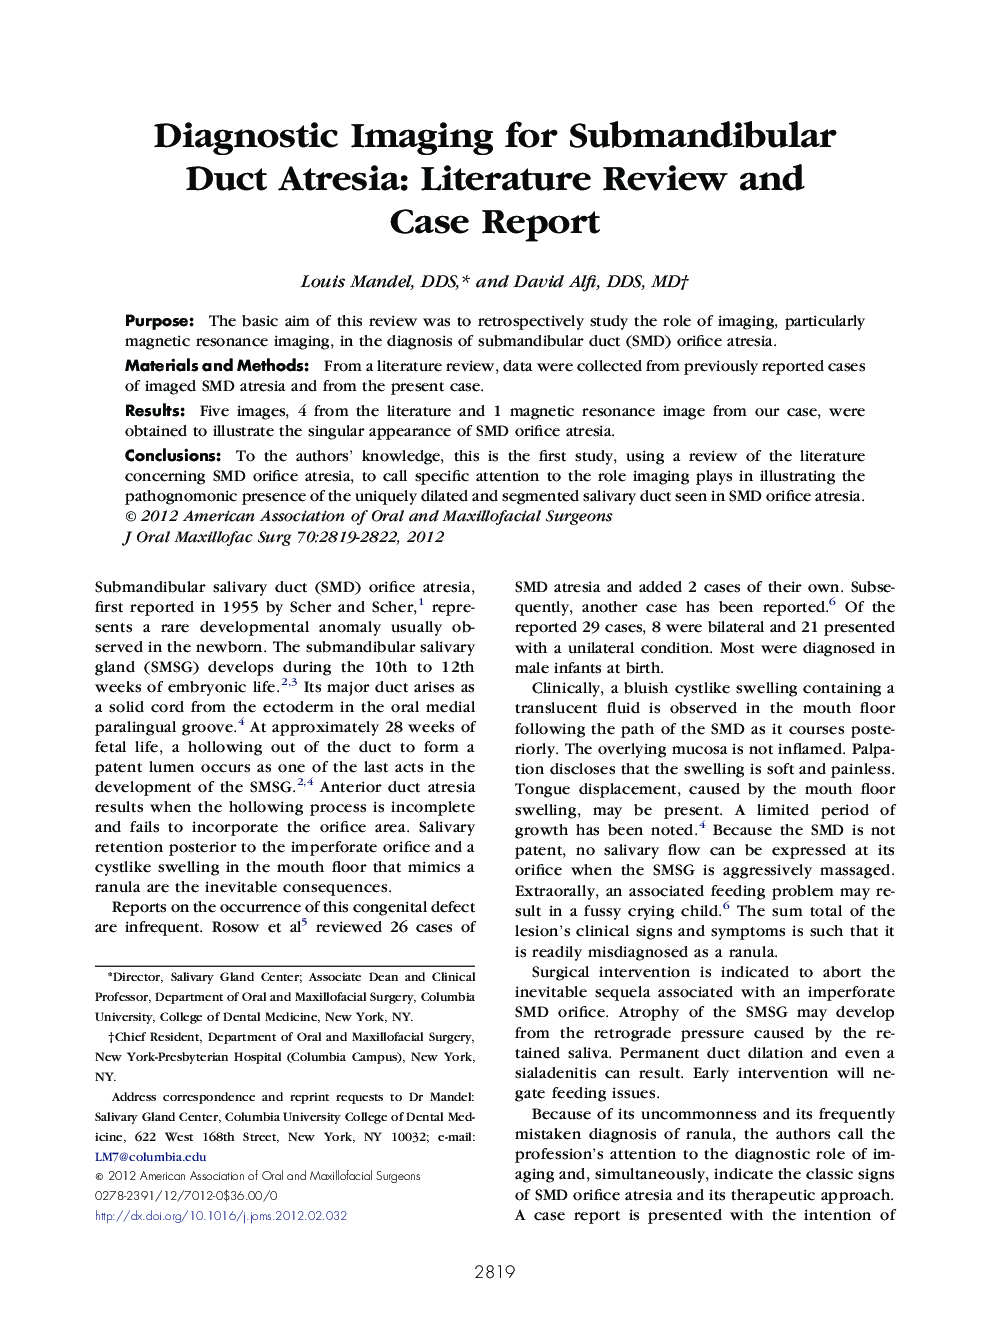 Diagnostic Imaging for Submandibular Duct Atresia: Literature Review and Case Report